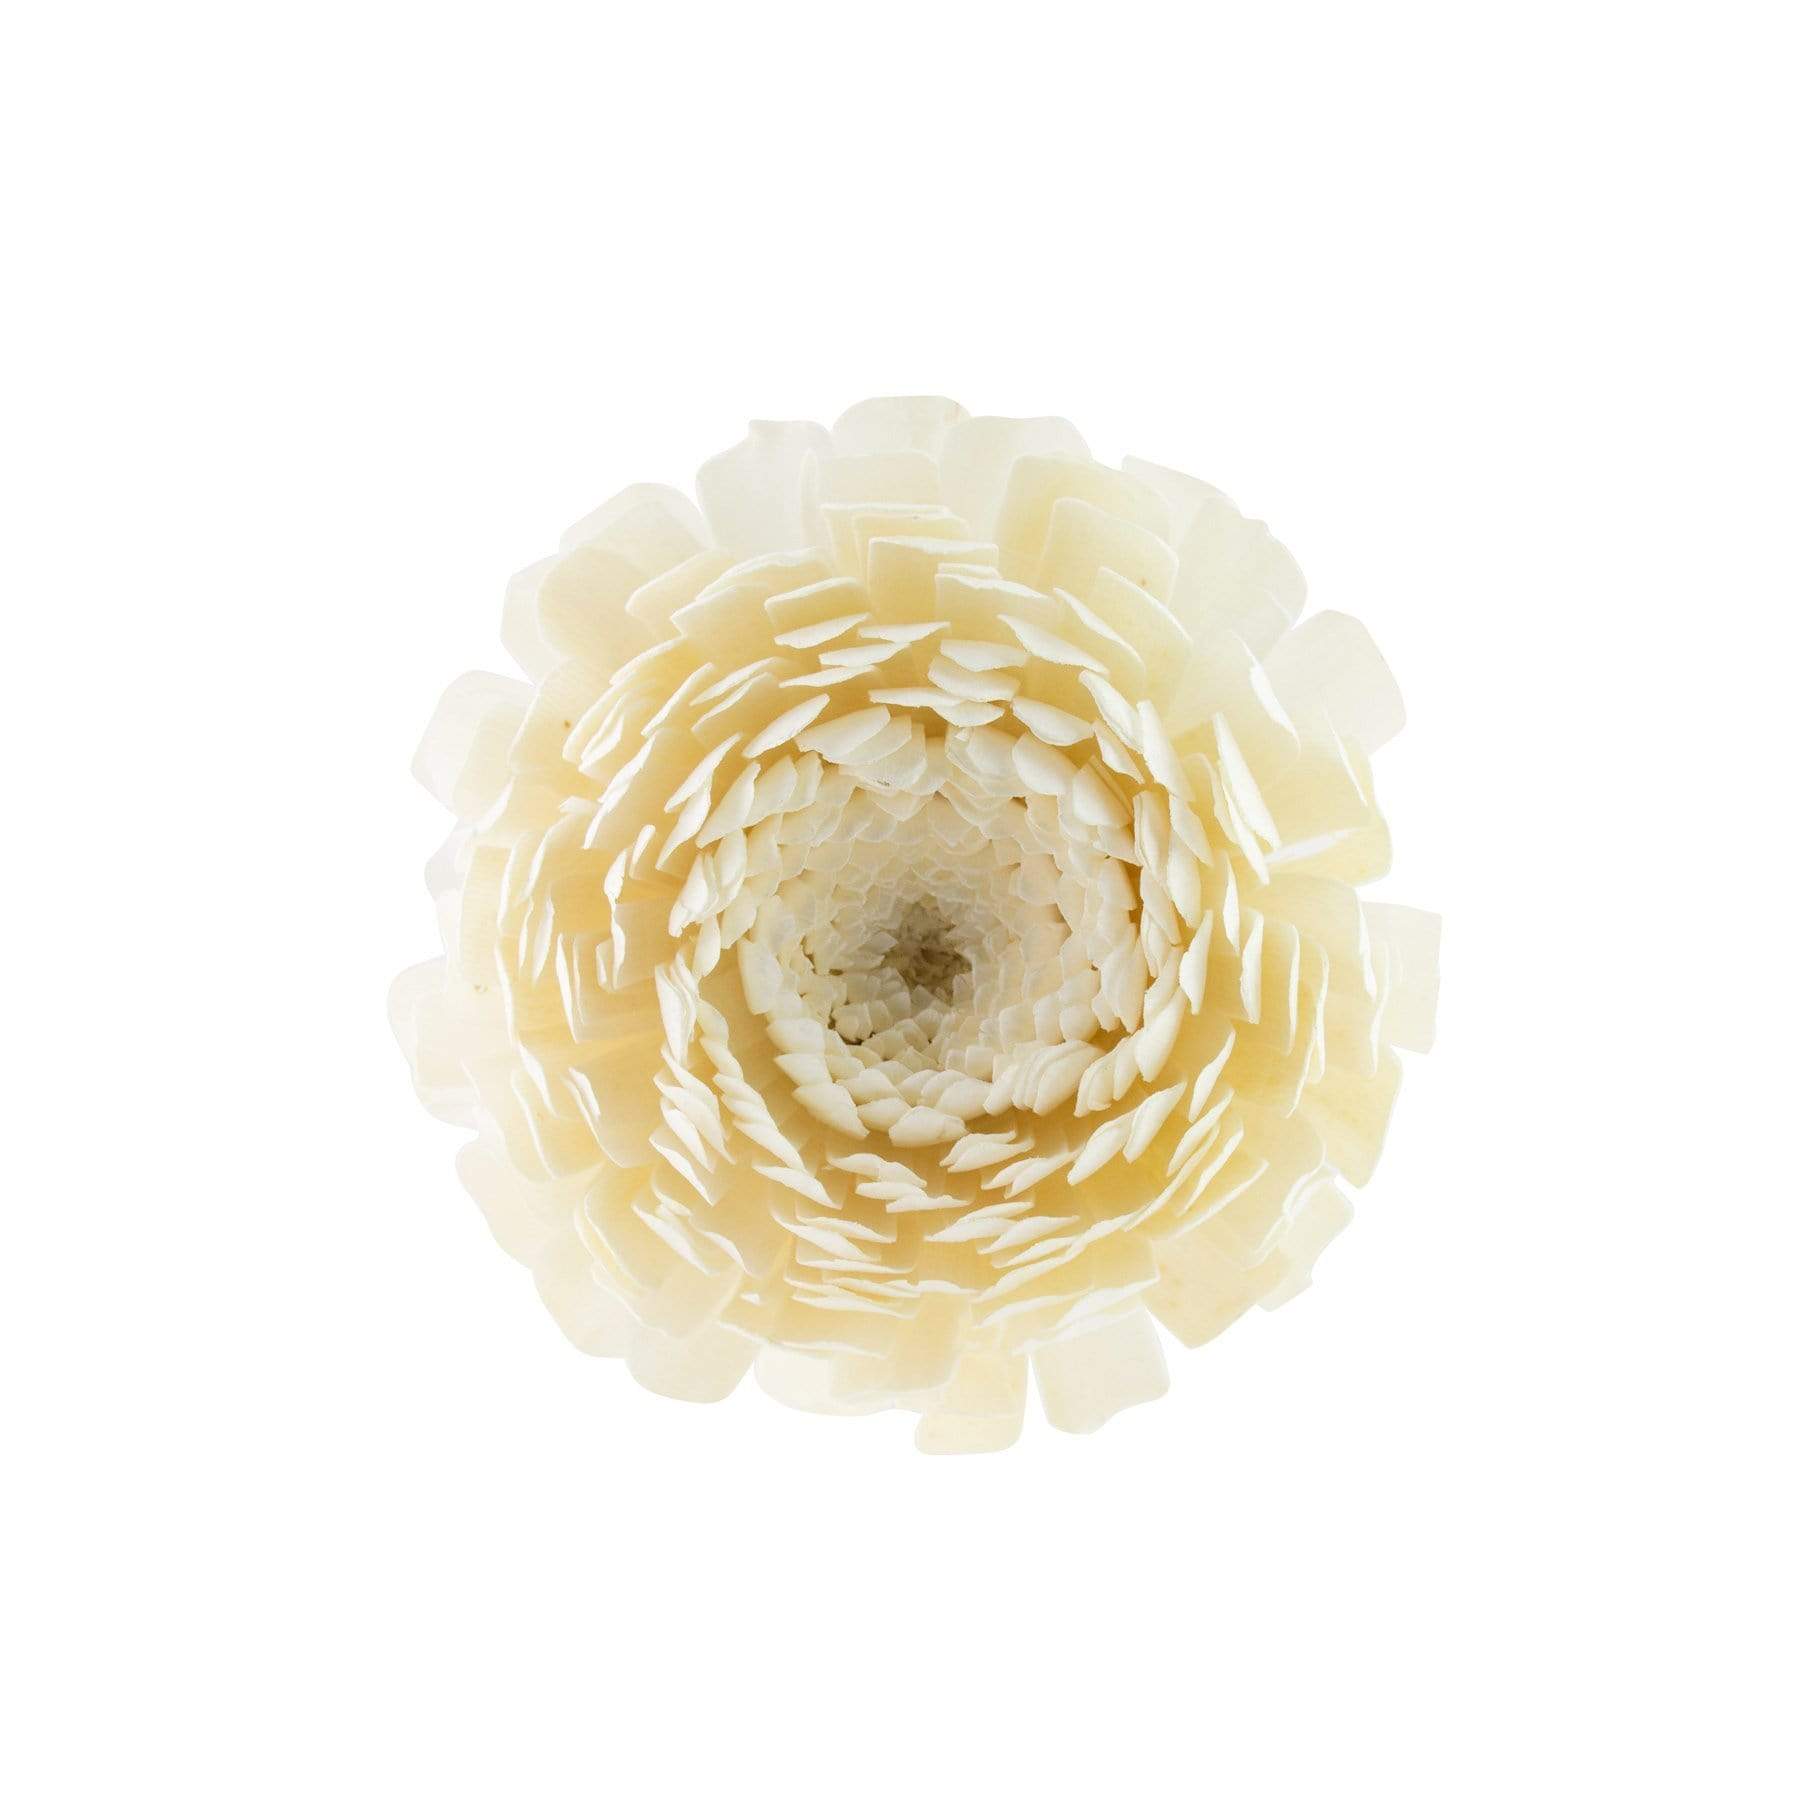 HYSSES Home Scents 5" Solar Flower Diffuser Refill - Chrysanthemum